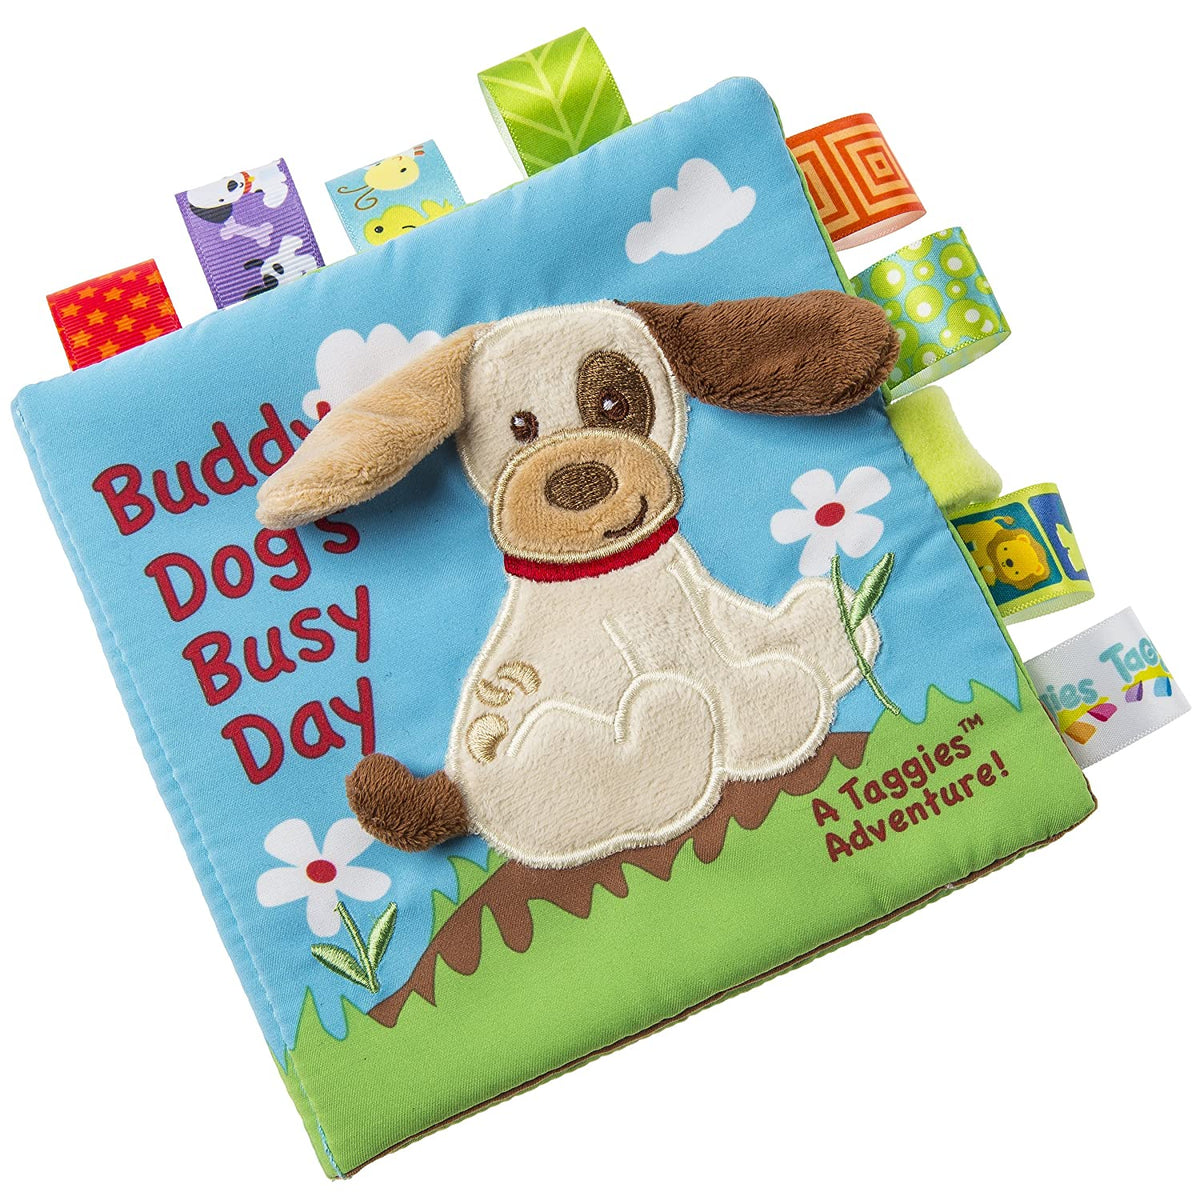 Buddy Dog’s Busy Day Cloth Book